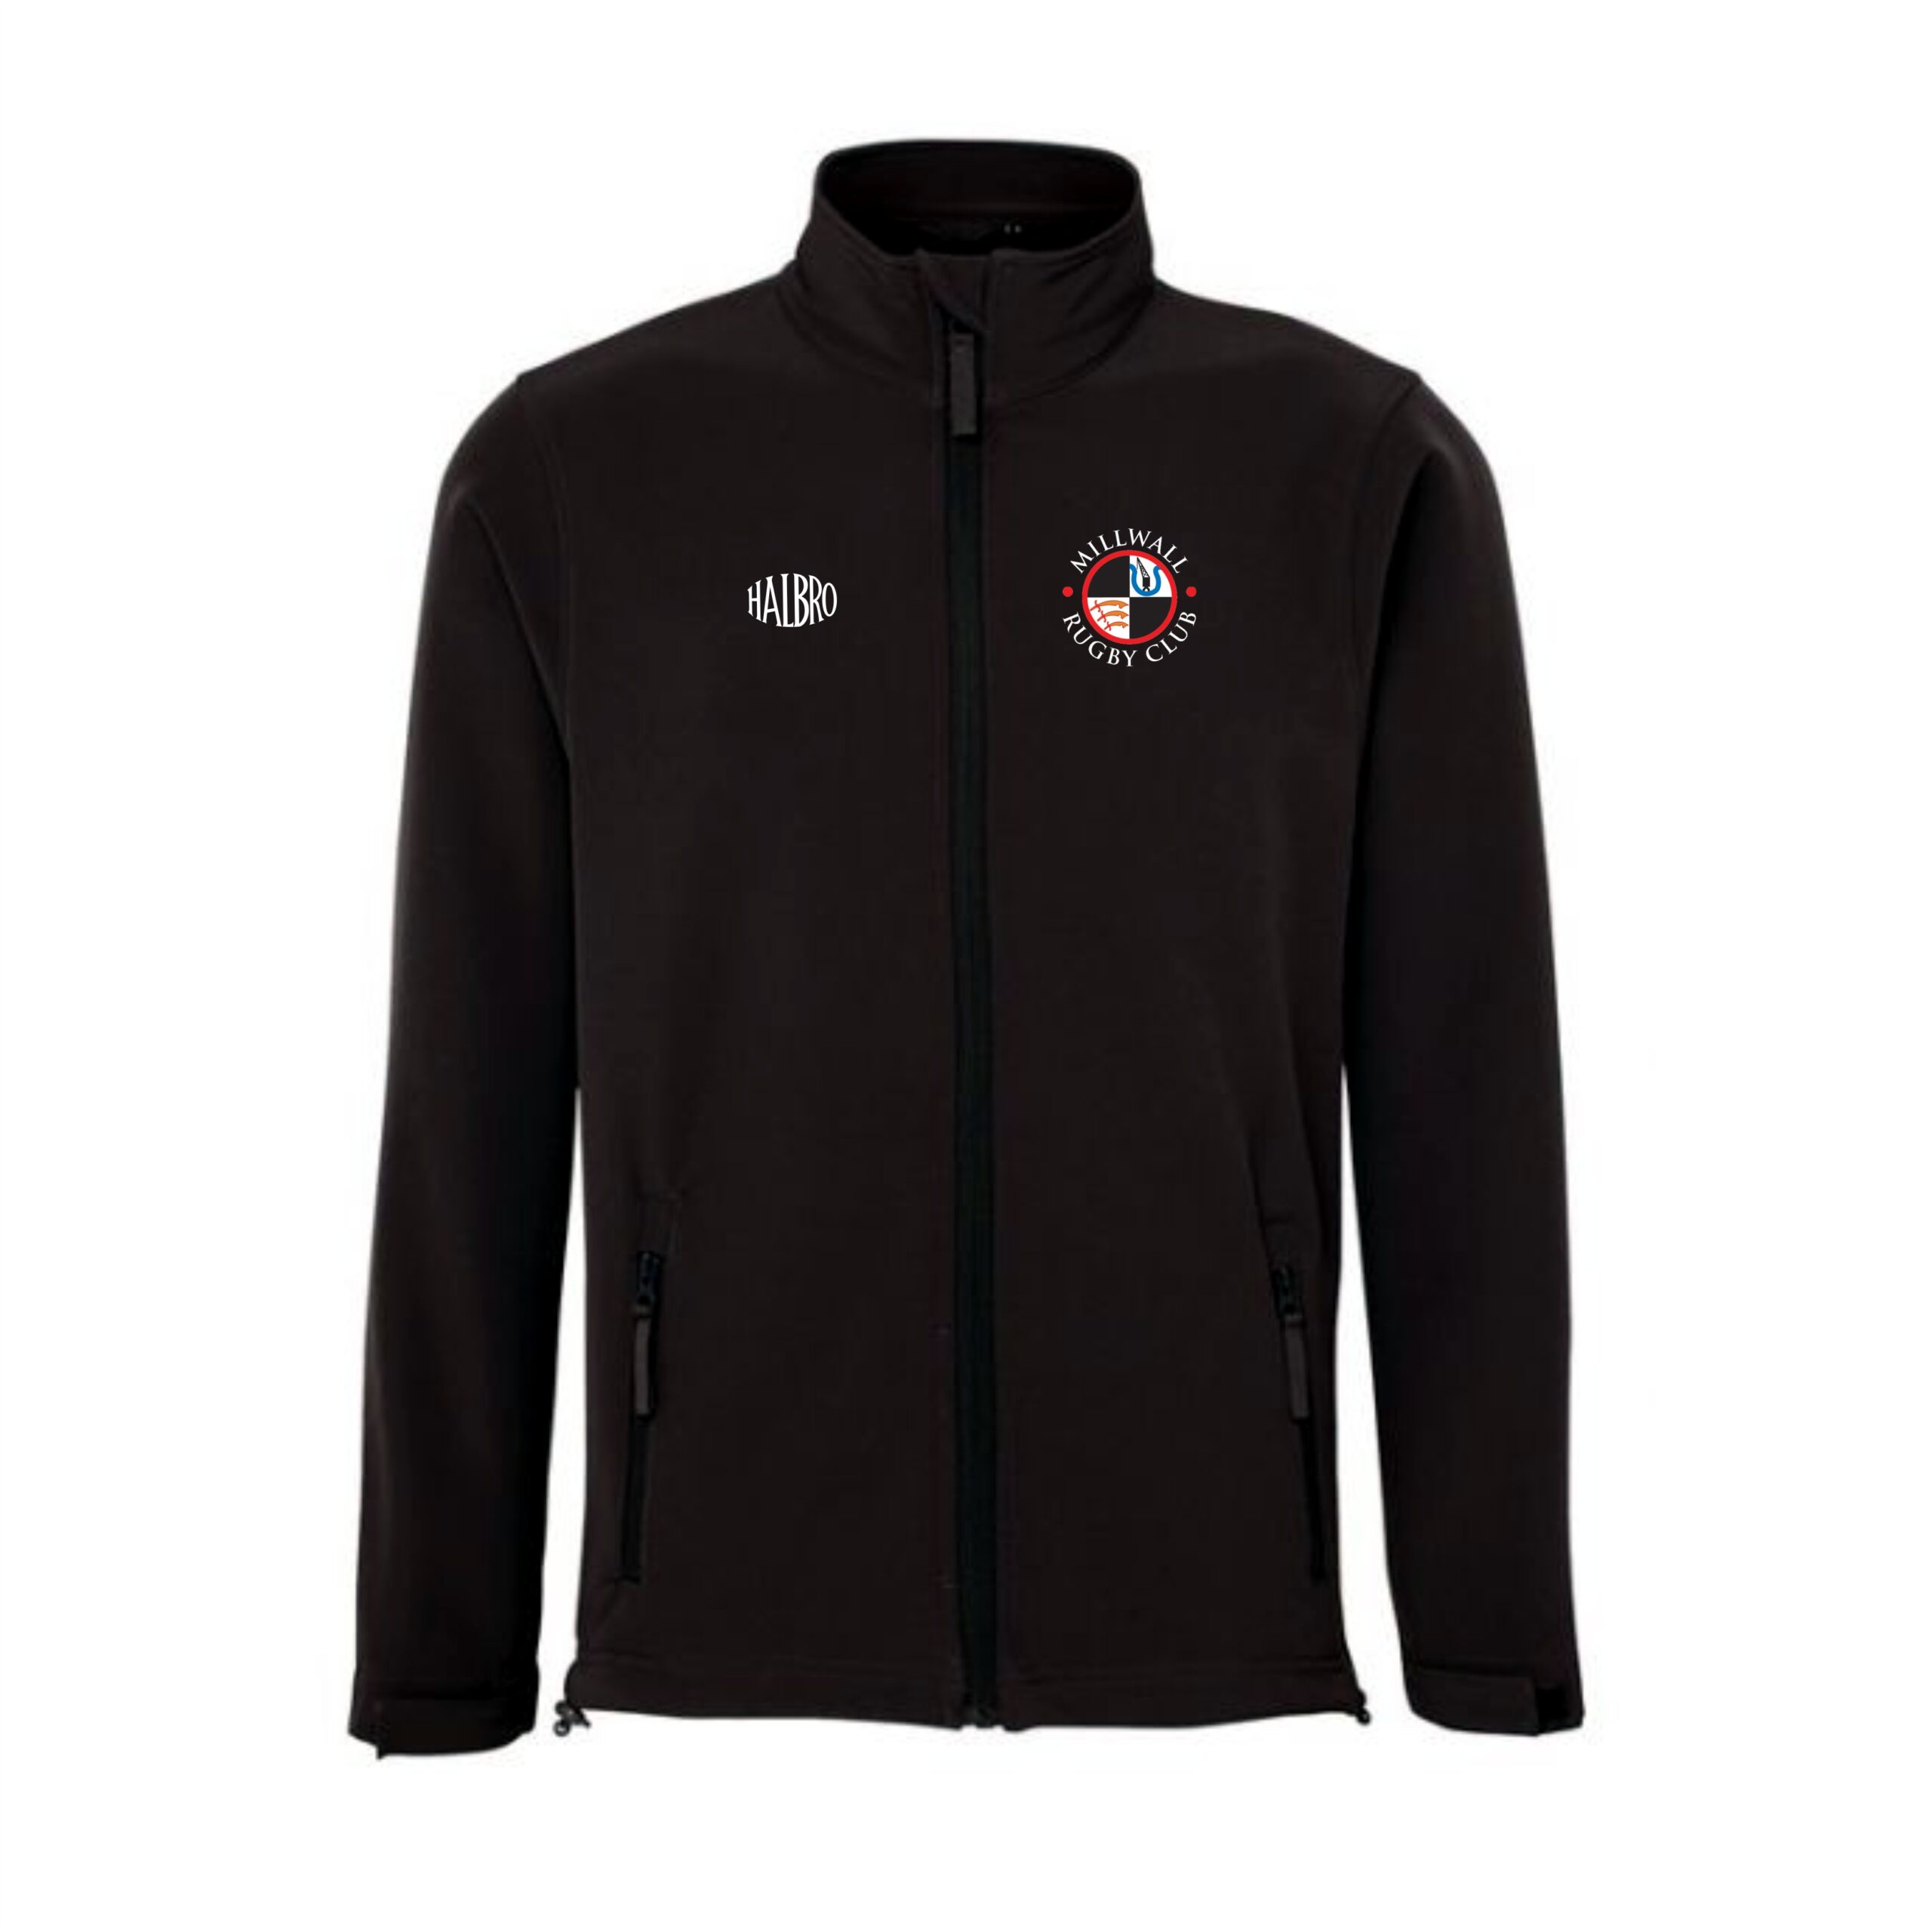 Millwall RFC Unisex Soft Shell Jacket - Halbro Sportswear Limited